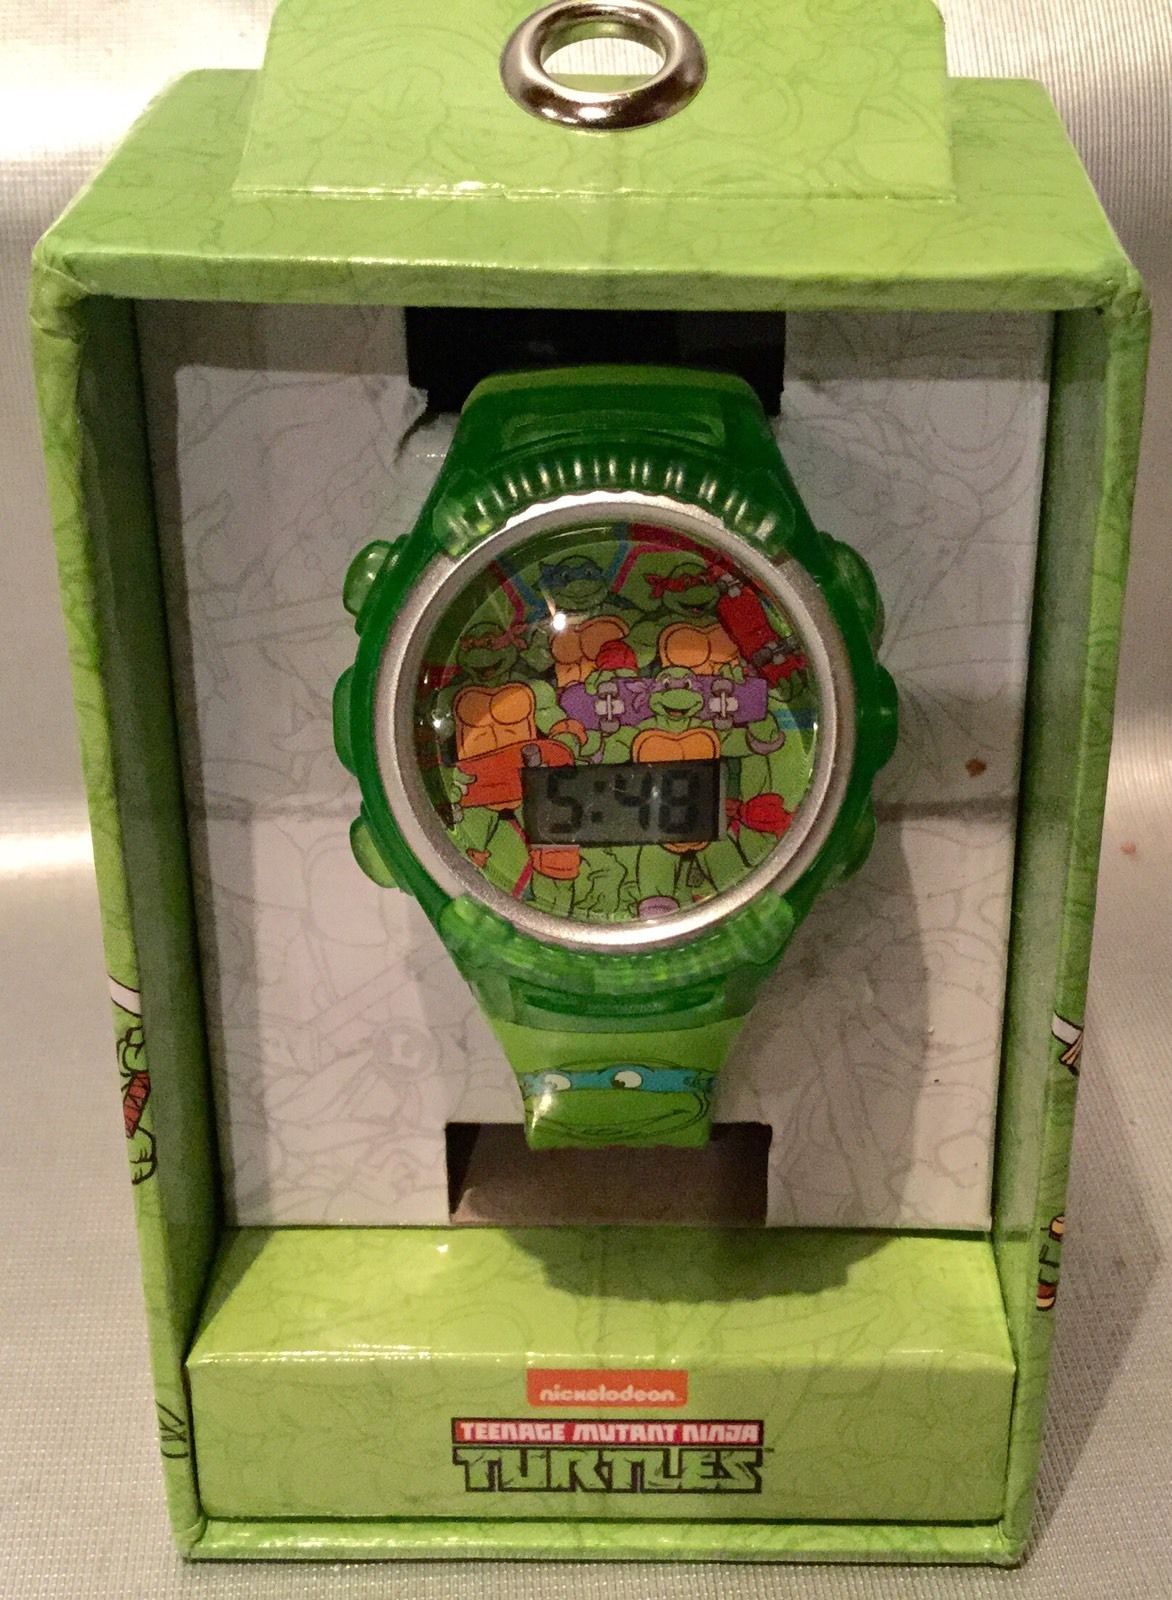 Teenage Mutant Ninja Turtles Flashing Lights Kid's LCD Watch - cowabunga Time! - $19.94